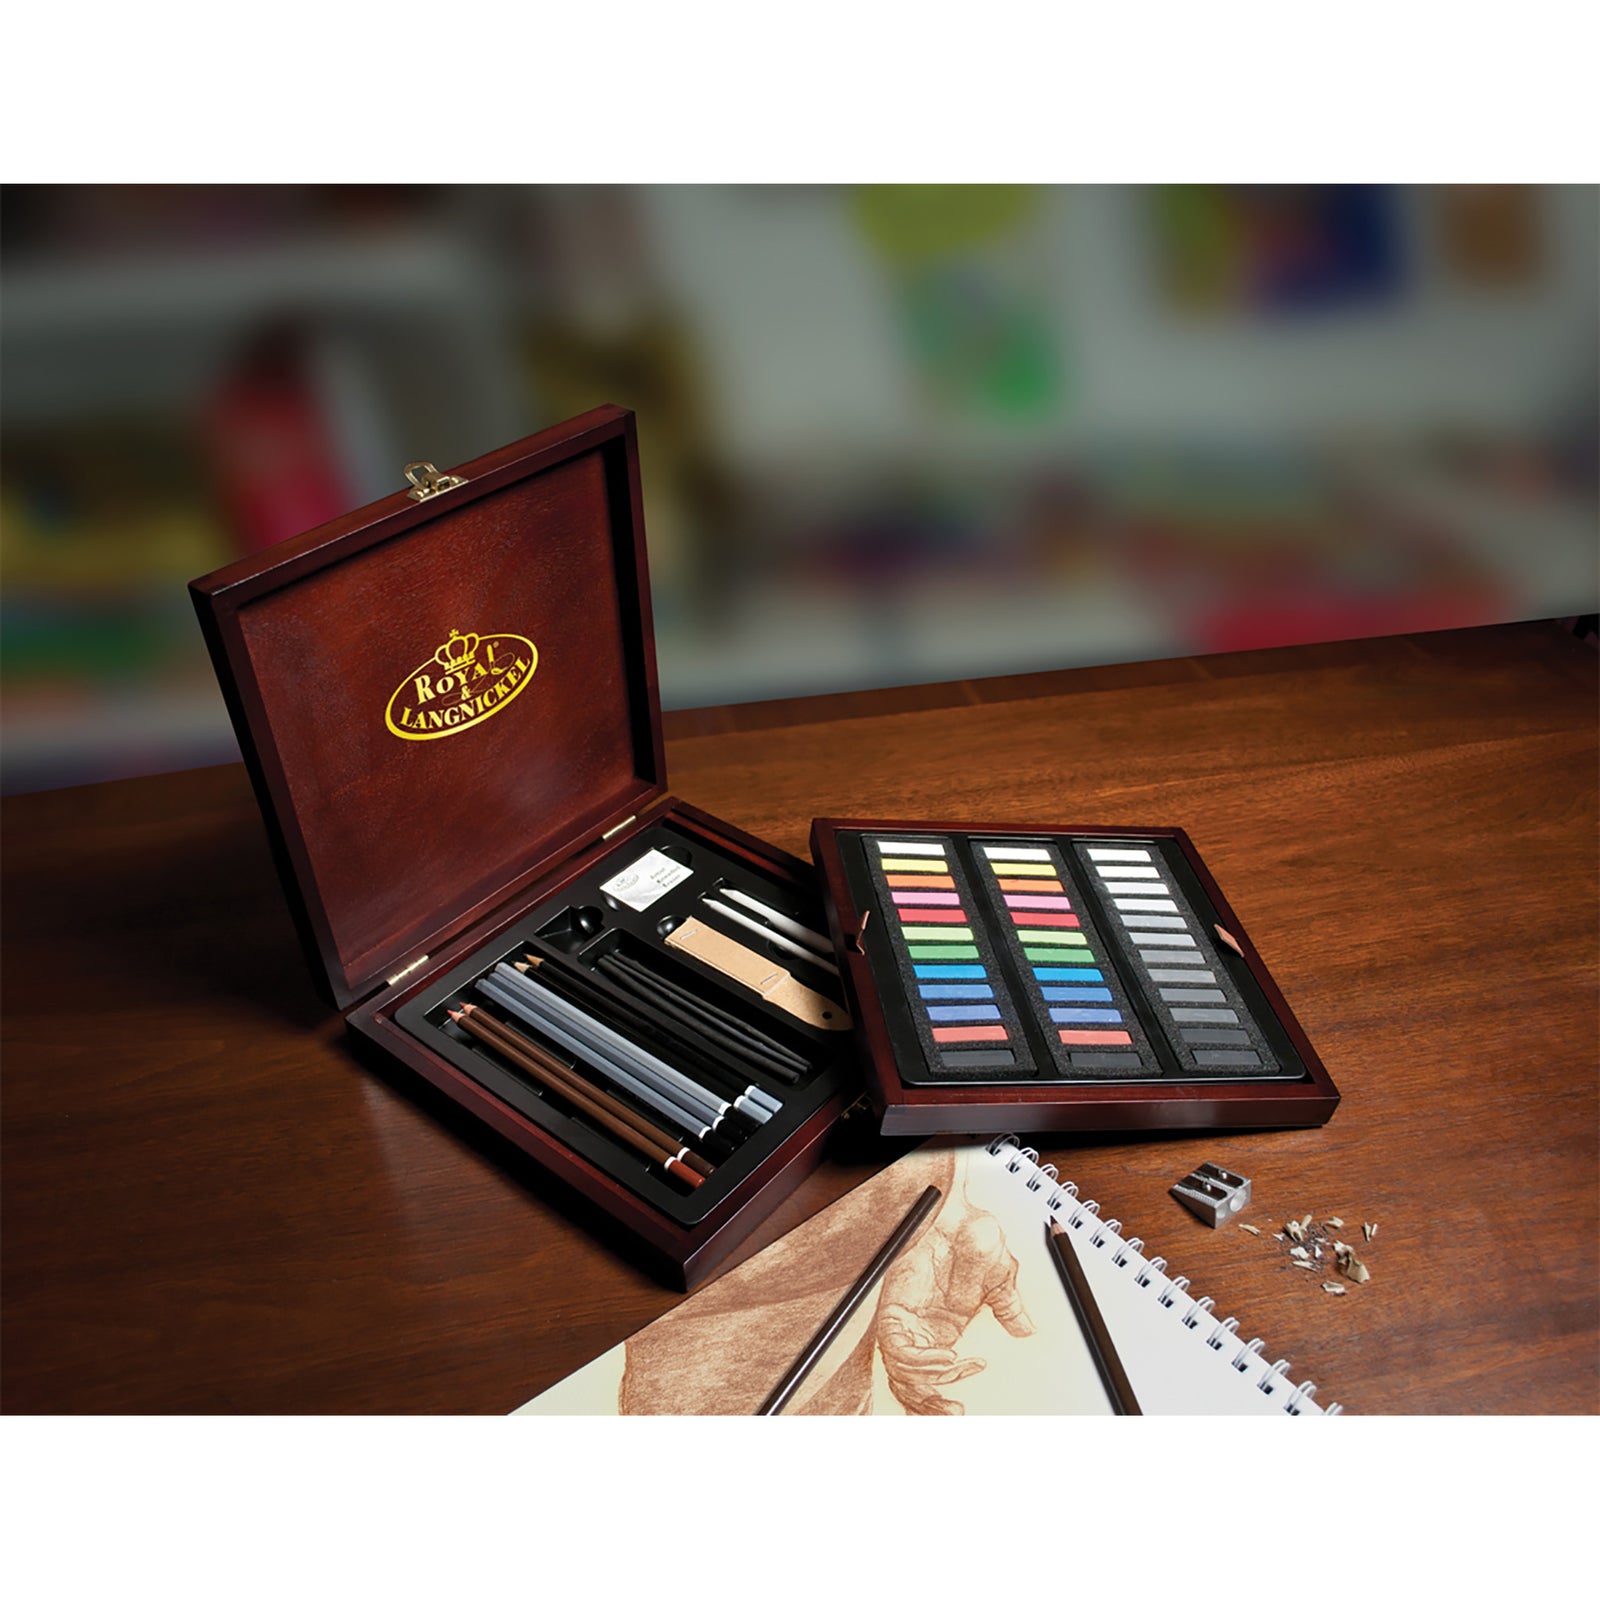 Studio Series - Colored Pencils (30-piece set) - Maxima Gift and Book Center